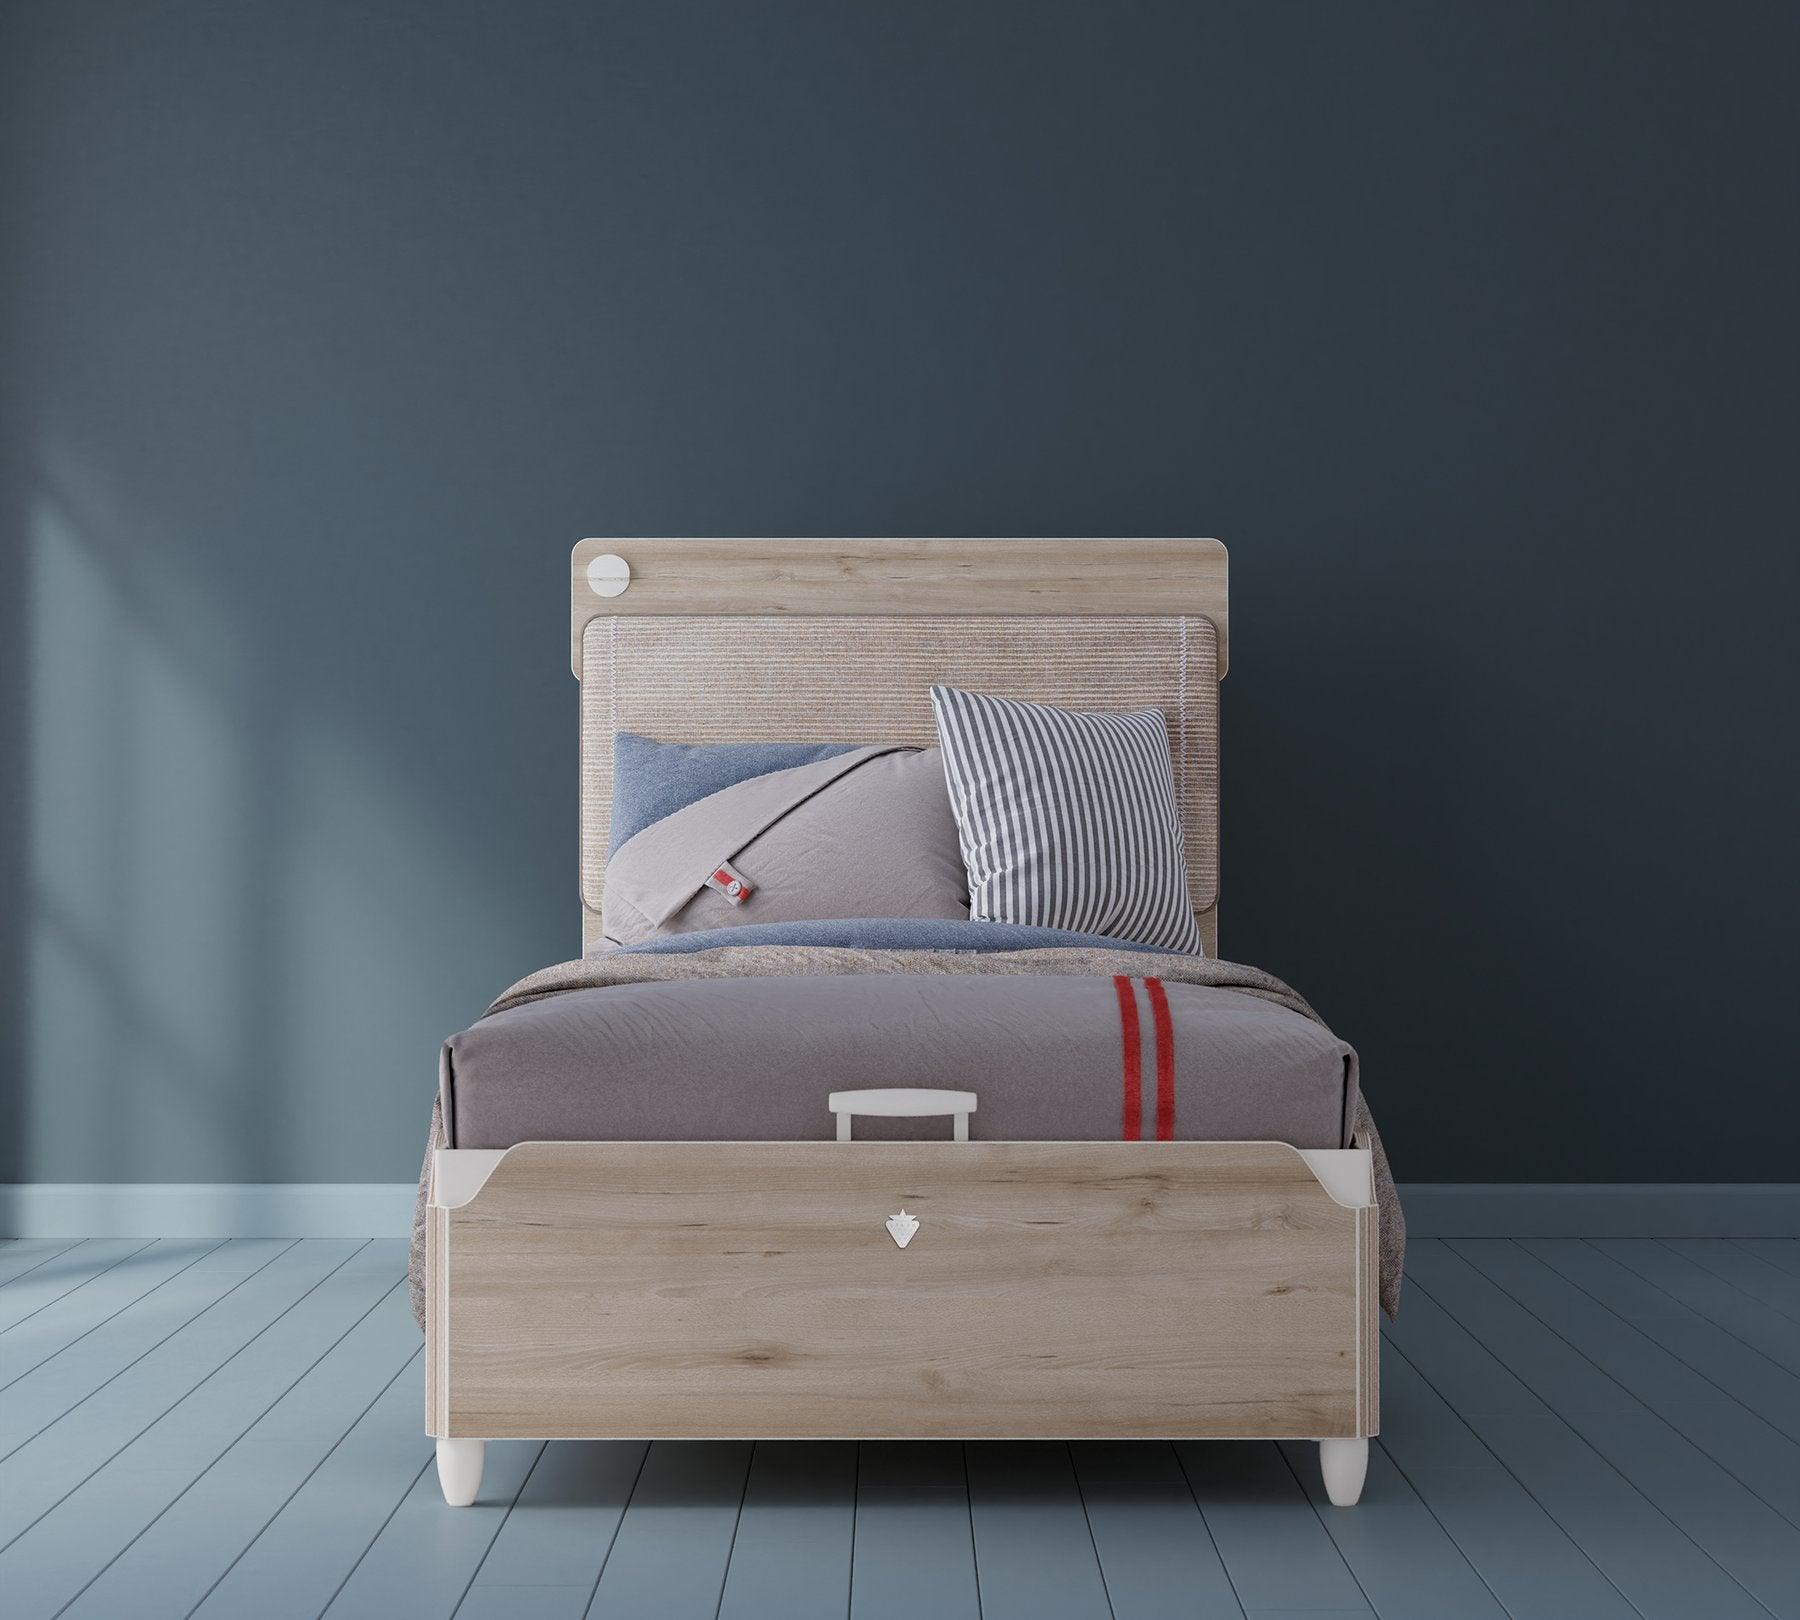 Cilek Duo Line Storage Bed (100X200 Cm or 120X200 Cm) - Kids Haven